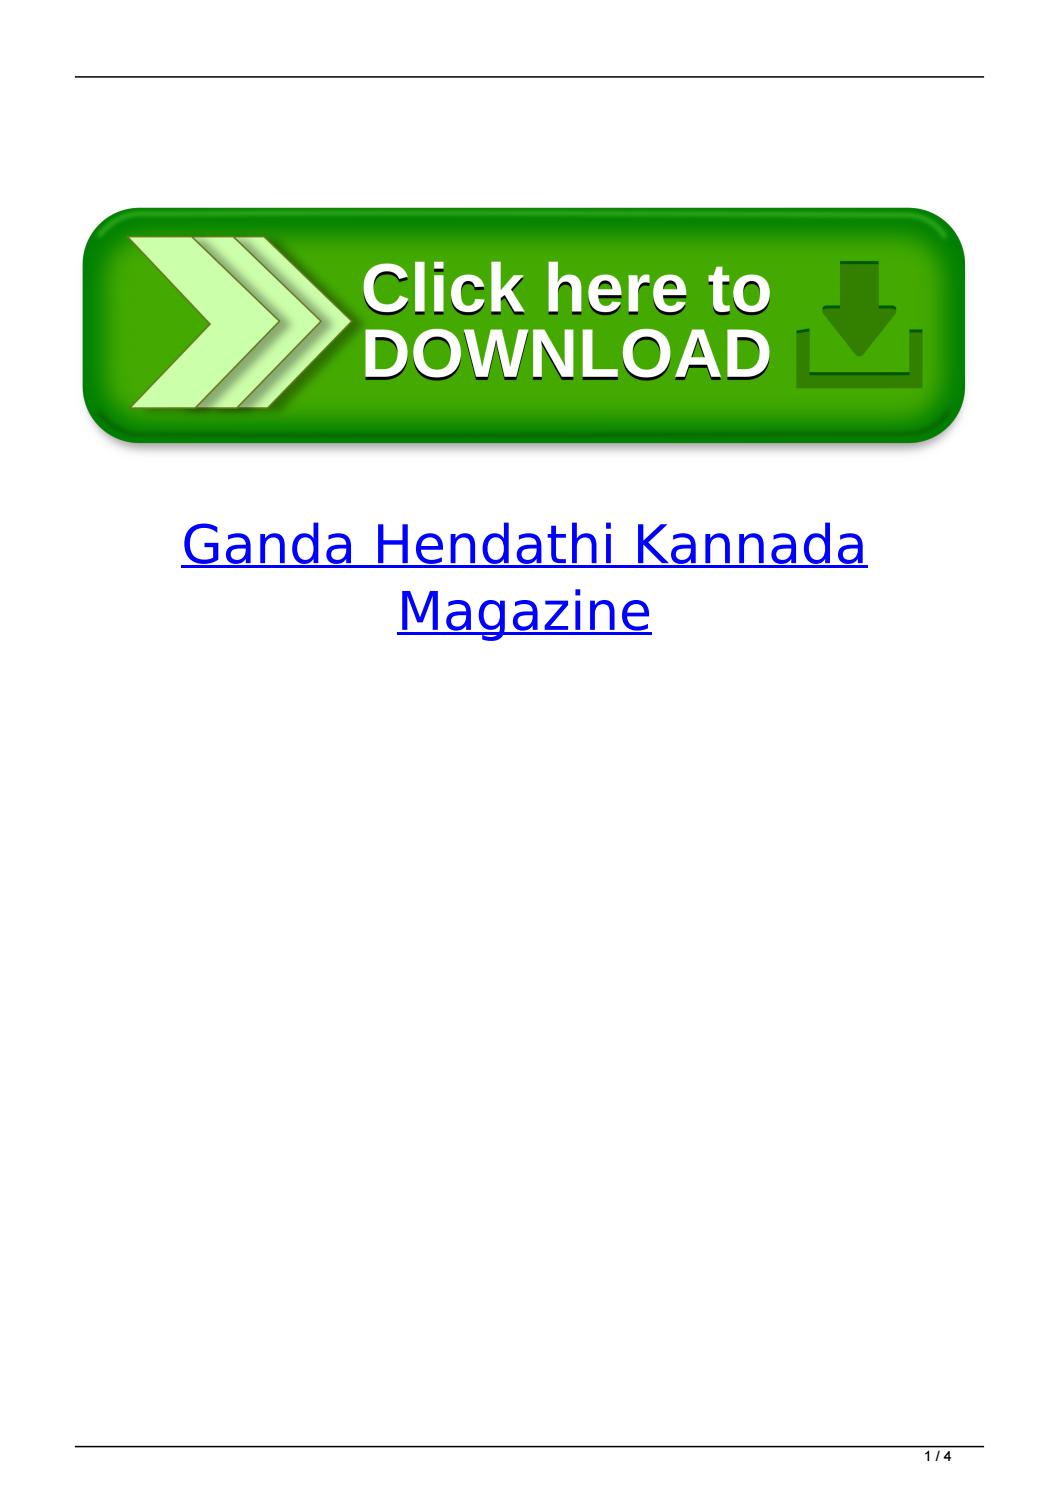 Ganda Hendathi Magazine In Kannada